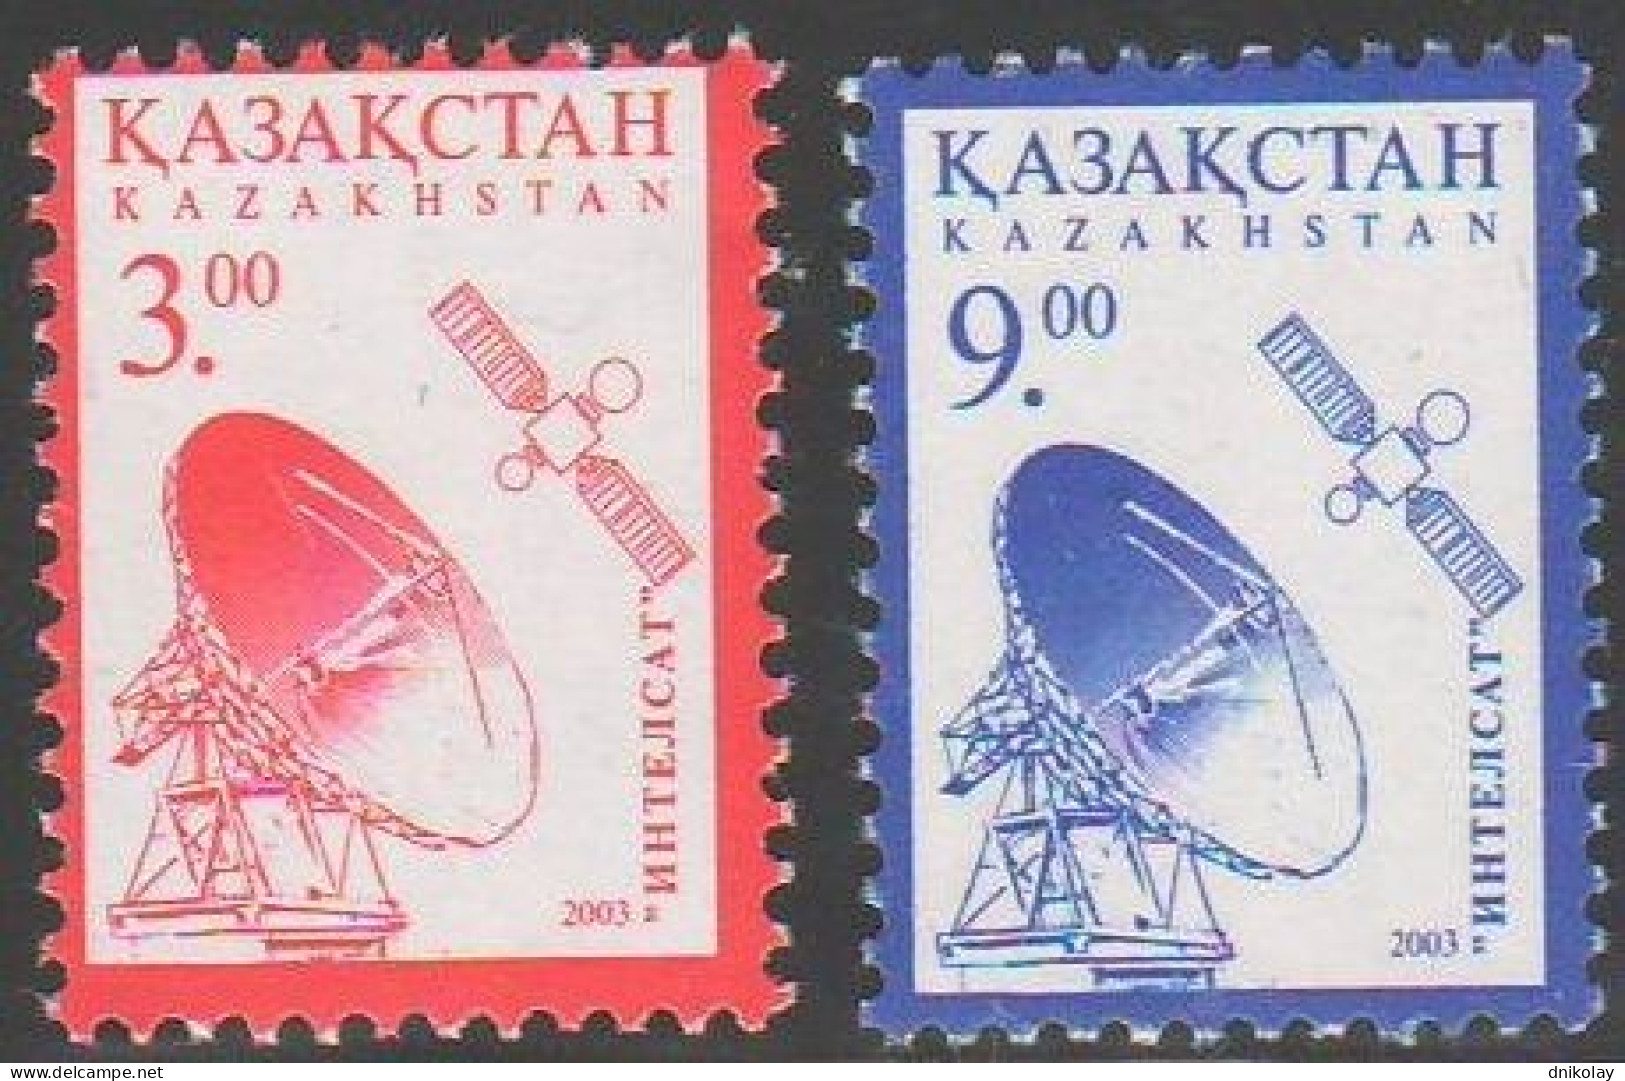 2003 441 Kazakhstan Space Satellite Station MNH - Kasachstan